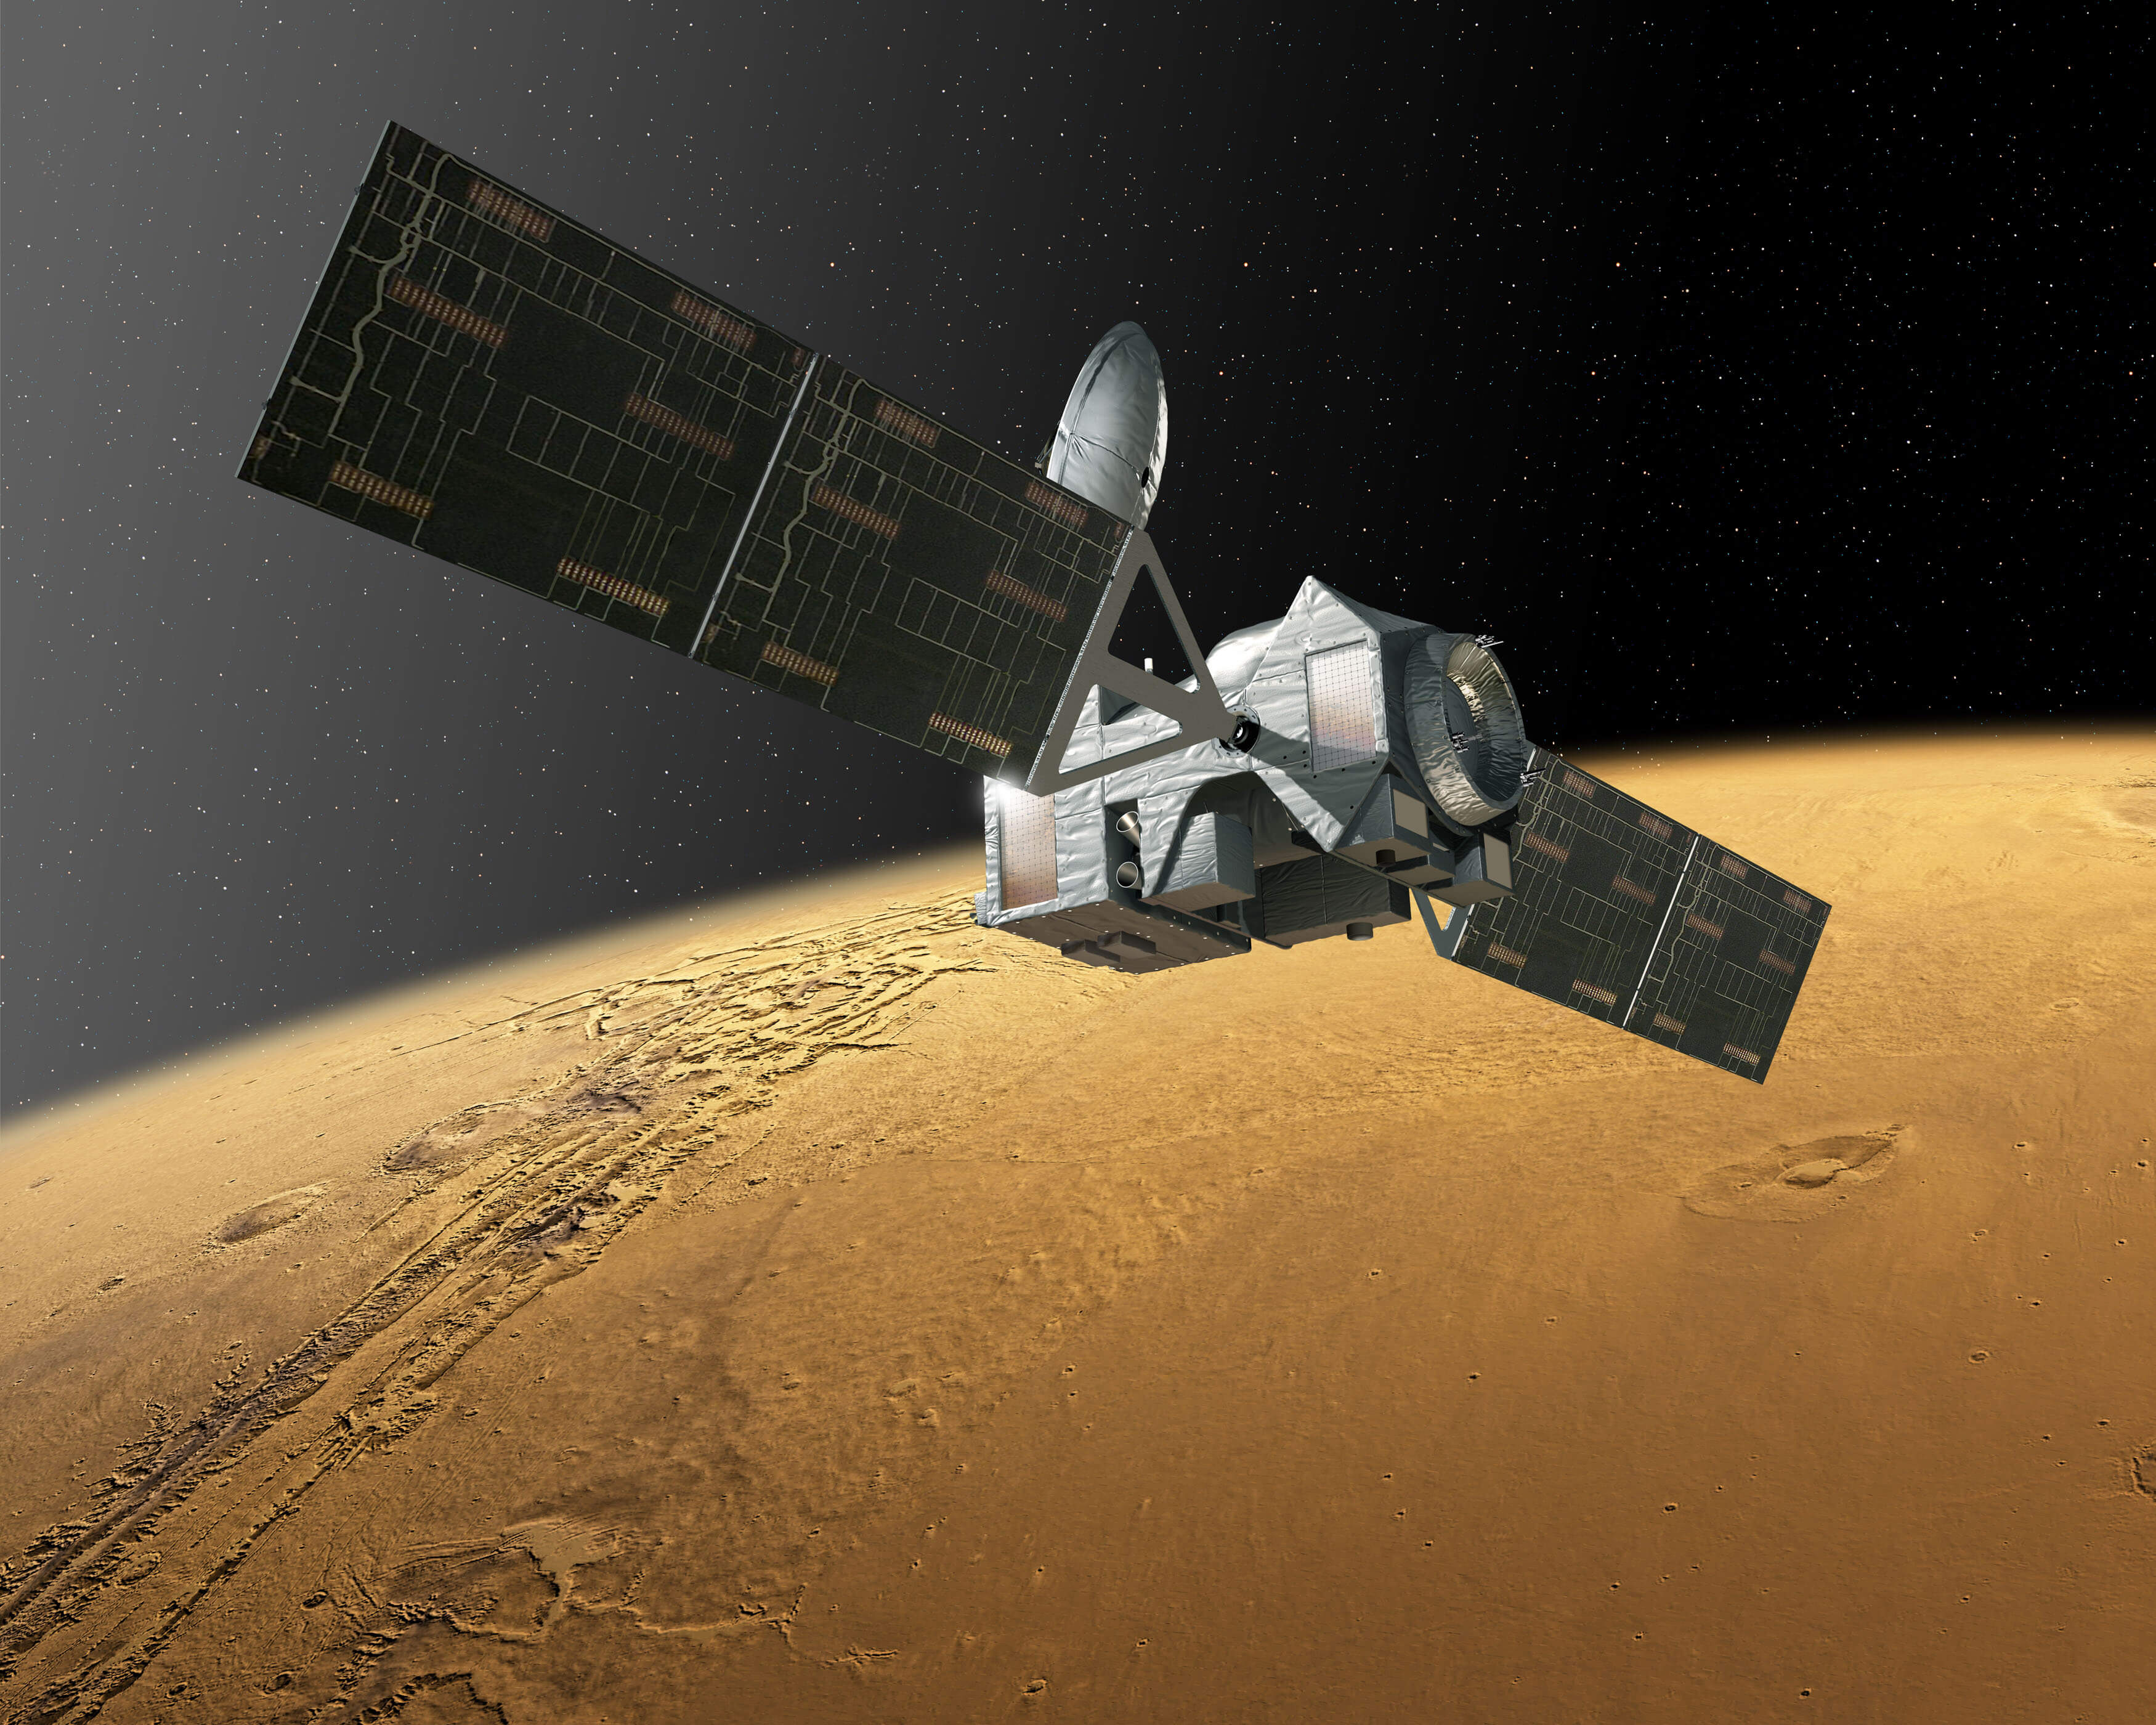 European-Russian mission to Mars postponed. Blame the coronavirus?